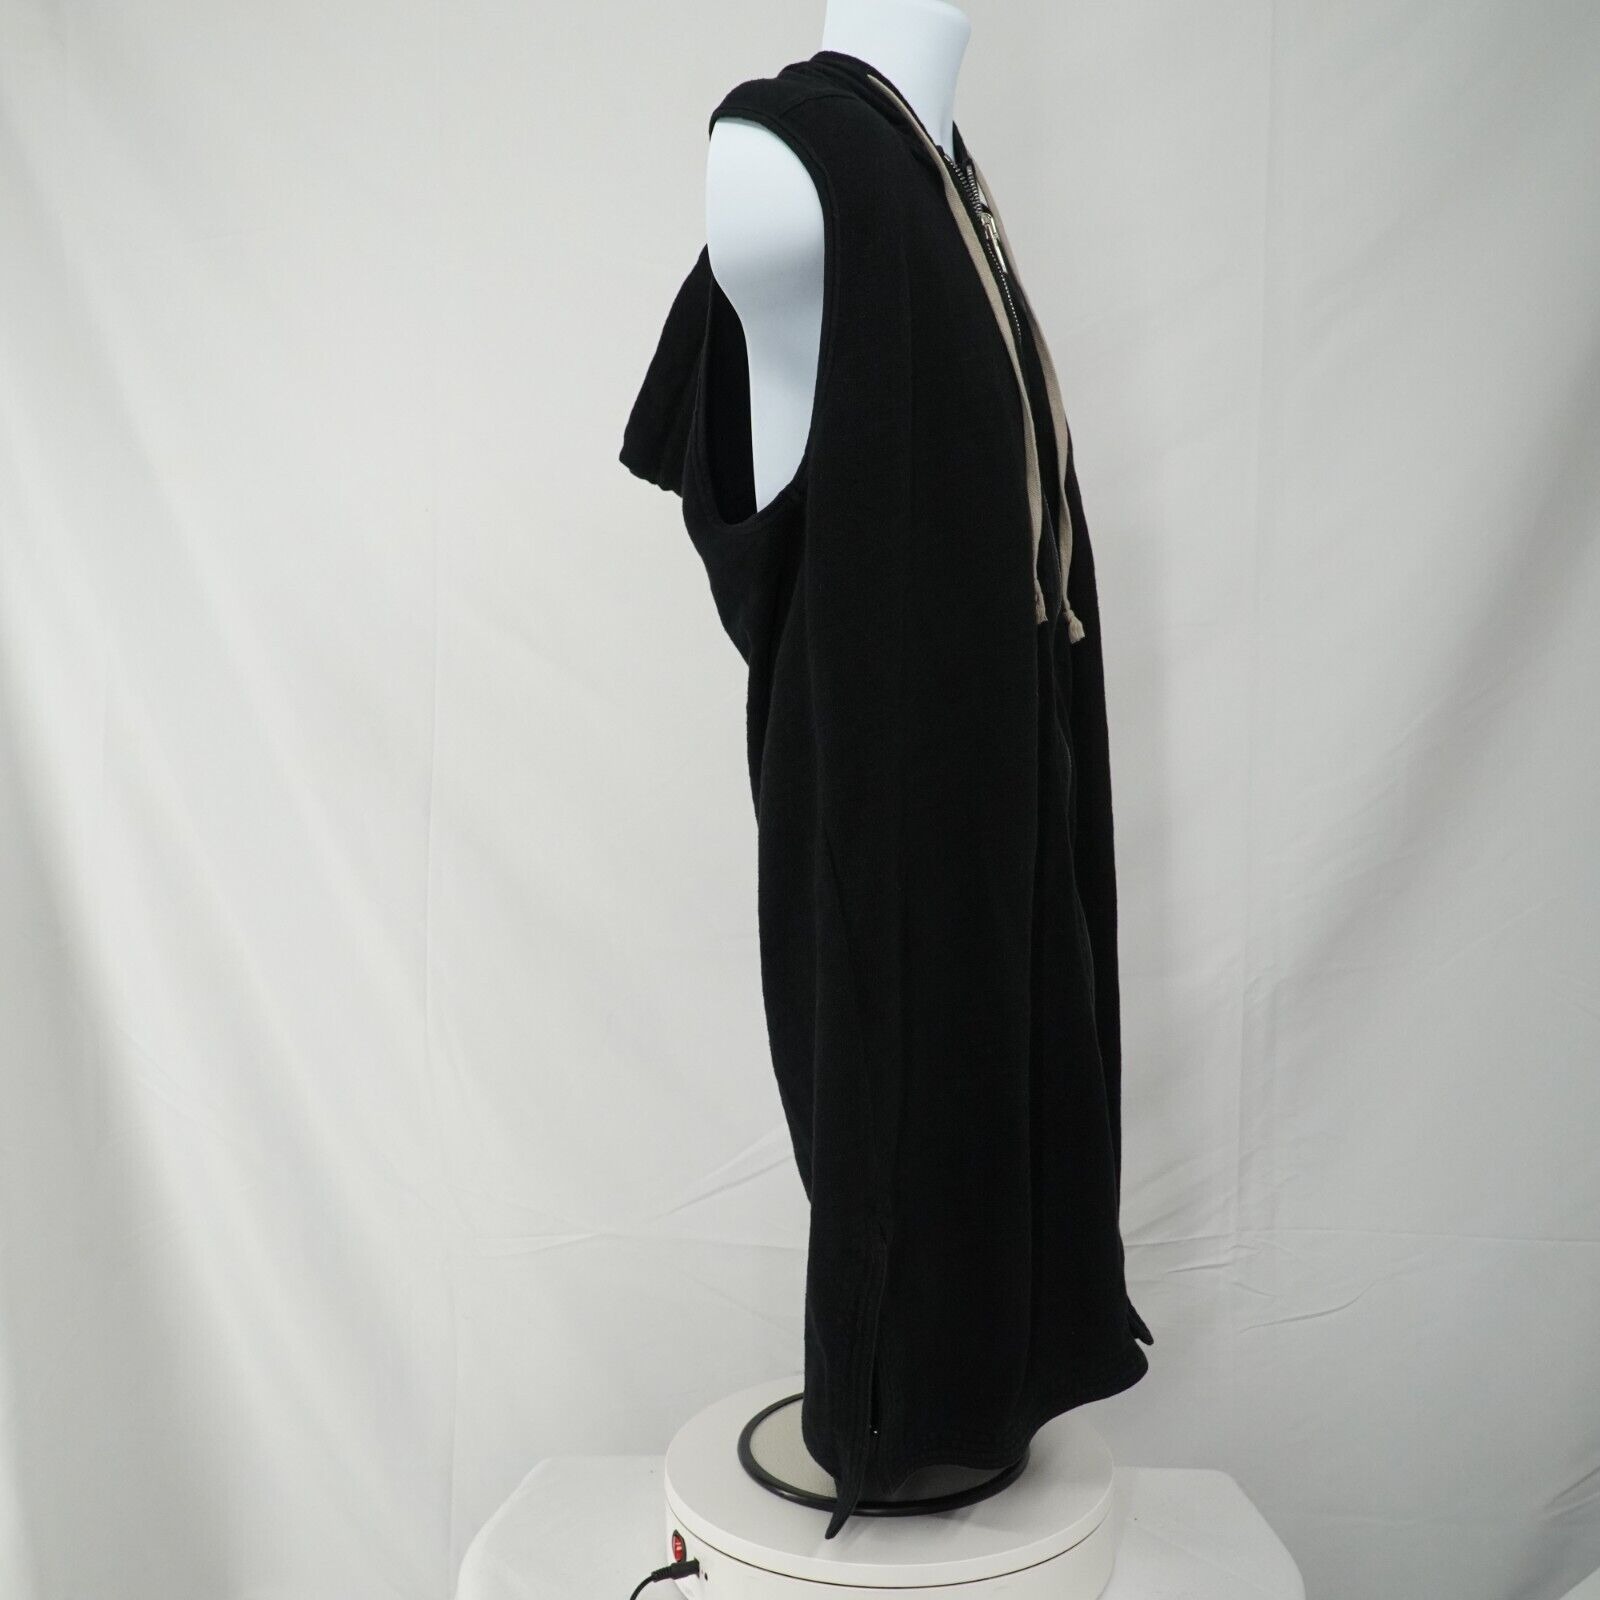 Black Zip Up Sleeveless Jacket Hoodie Cotton - Medium - 19